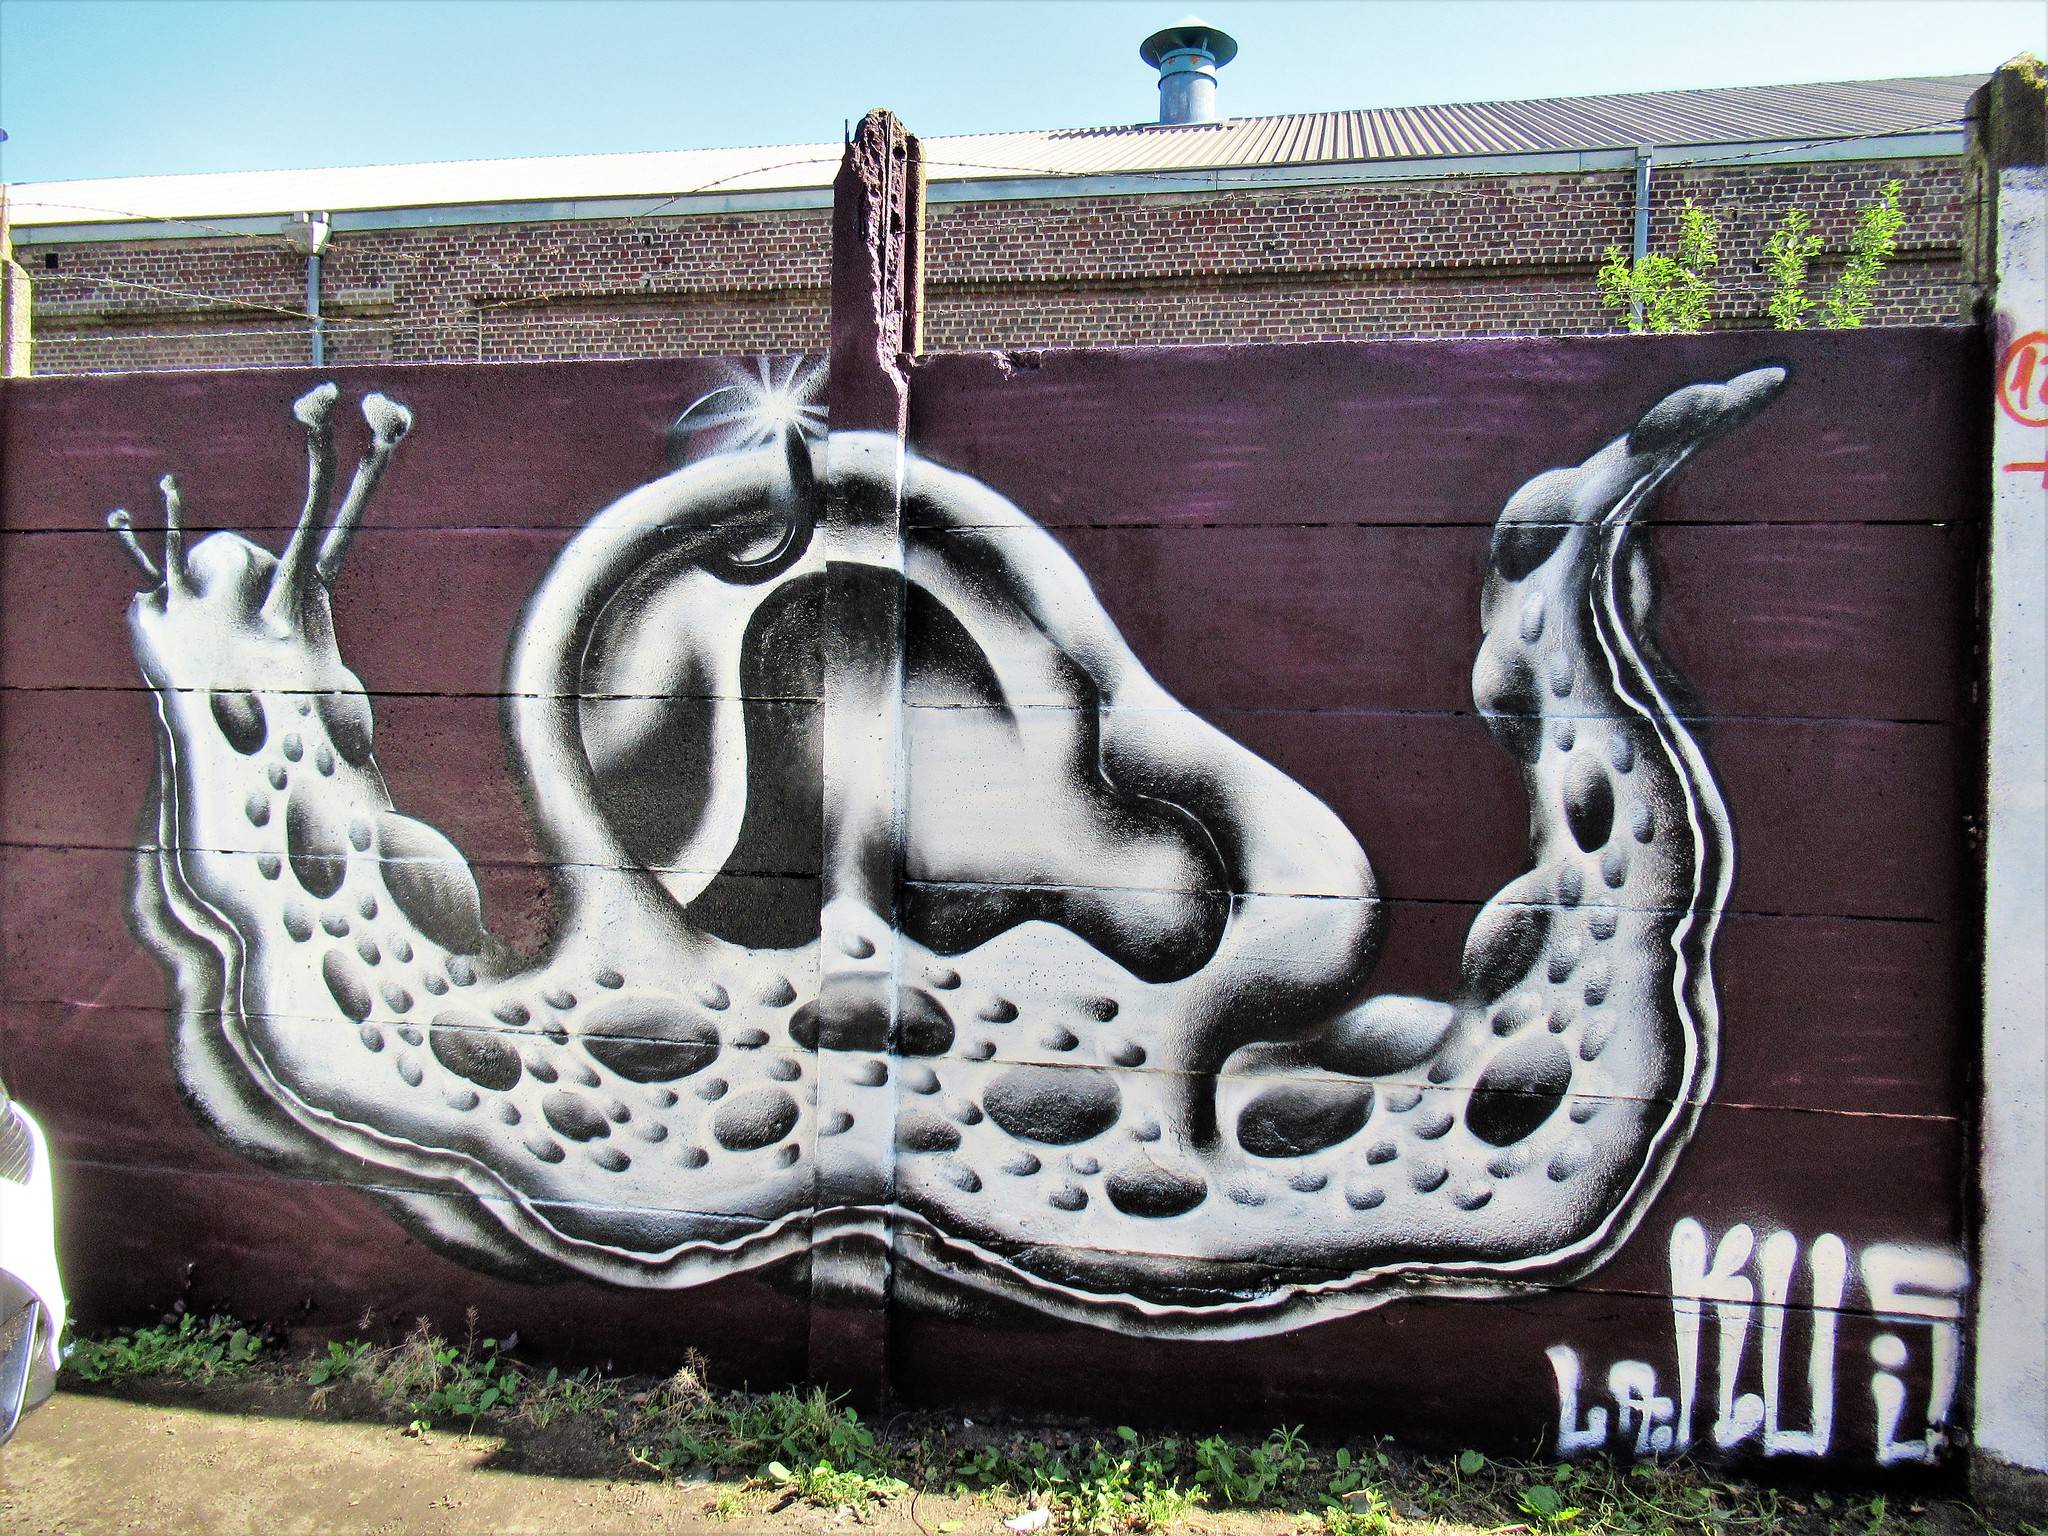 Various Artists&mdash;Le M.U.R. graffiti jam